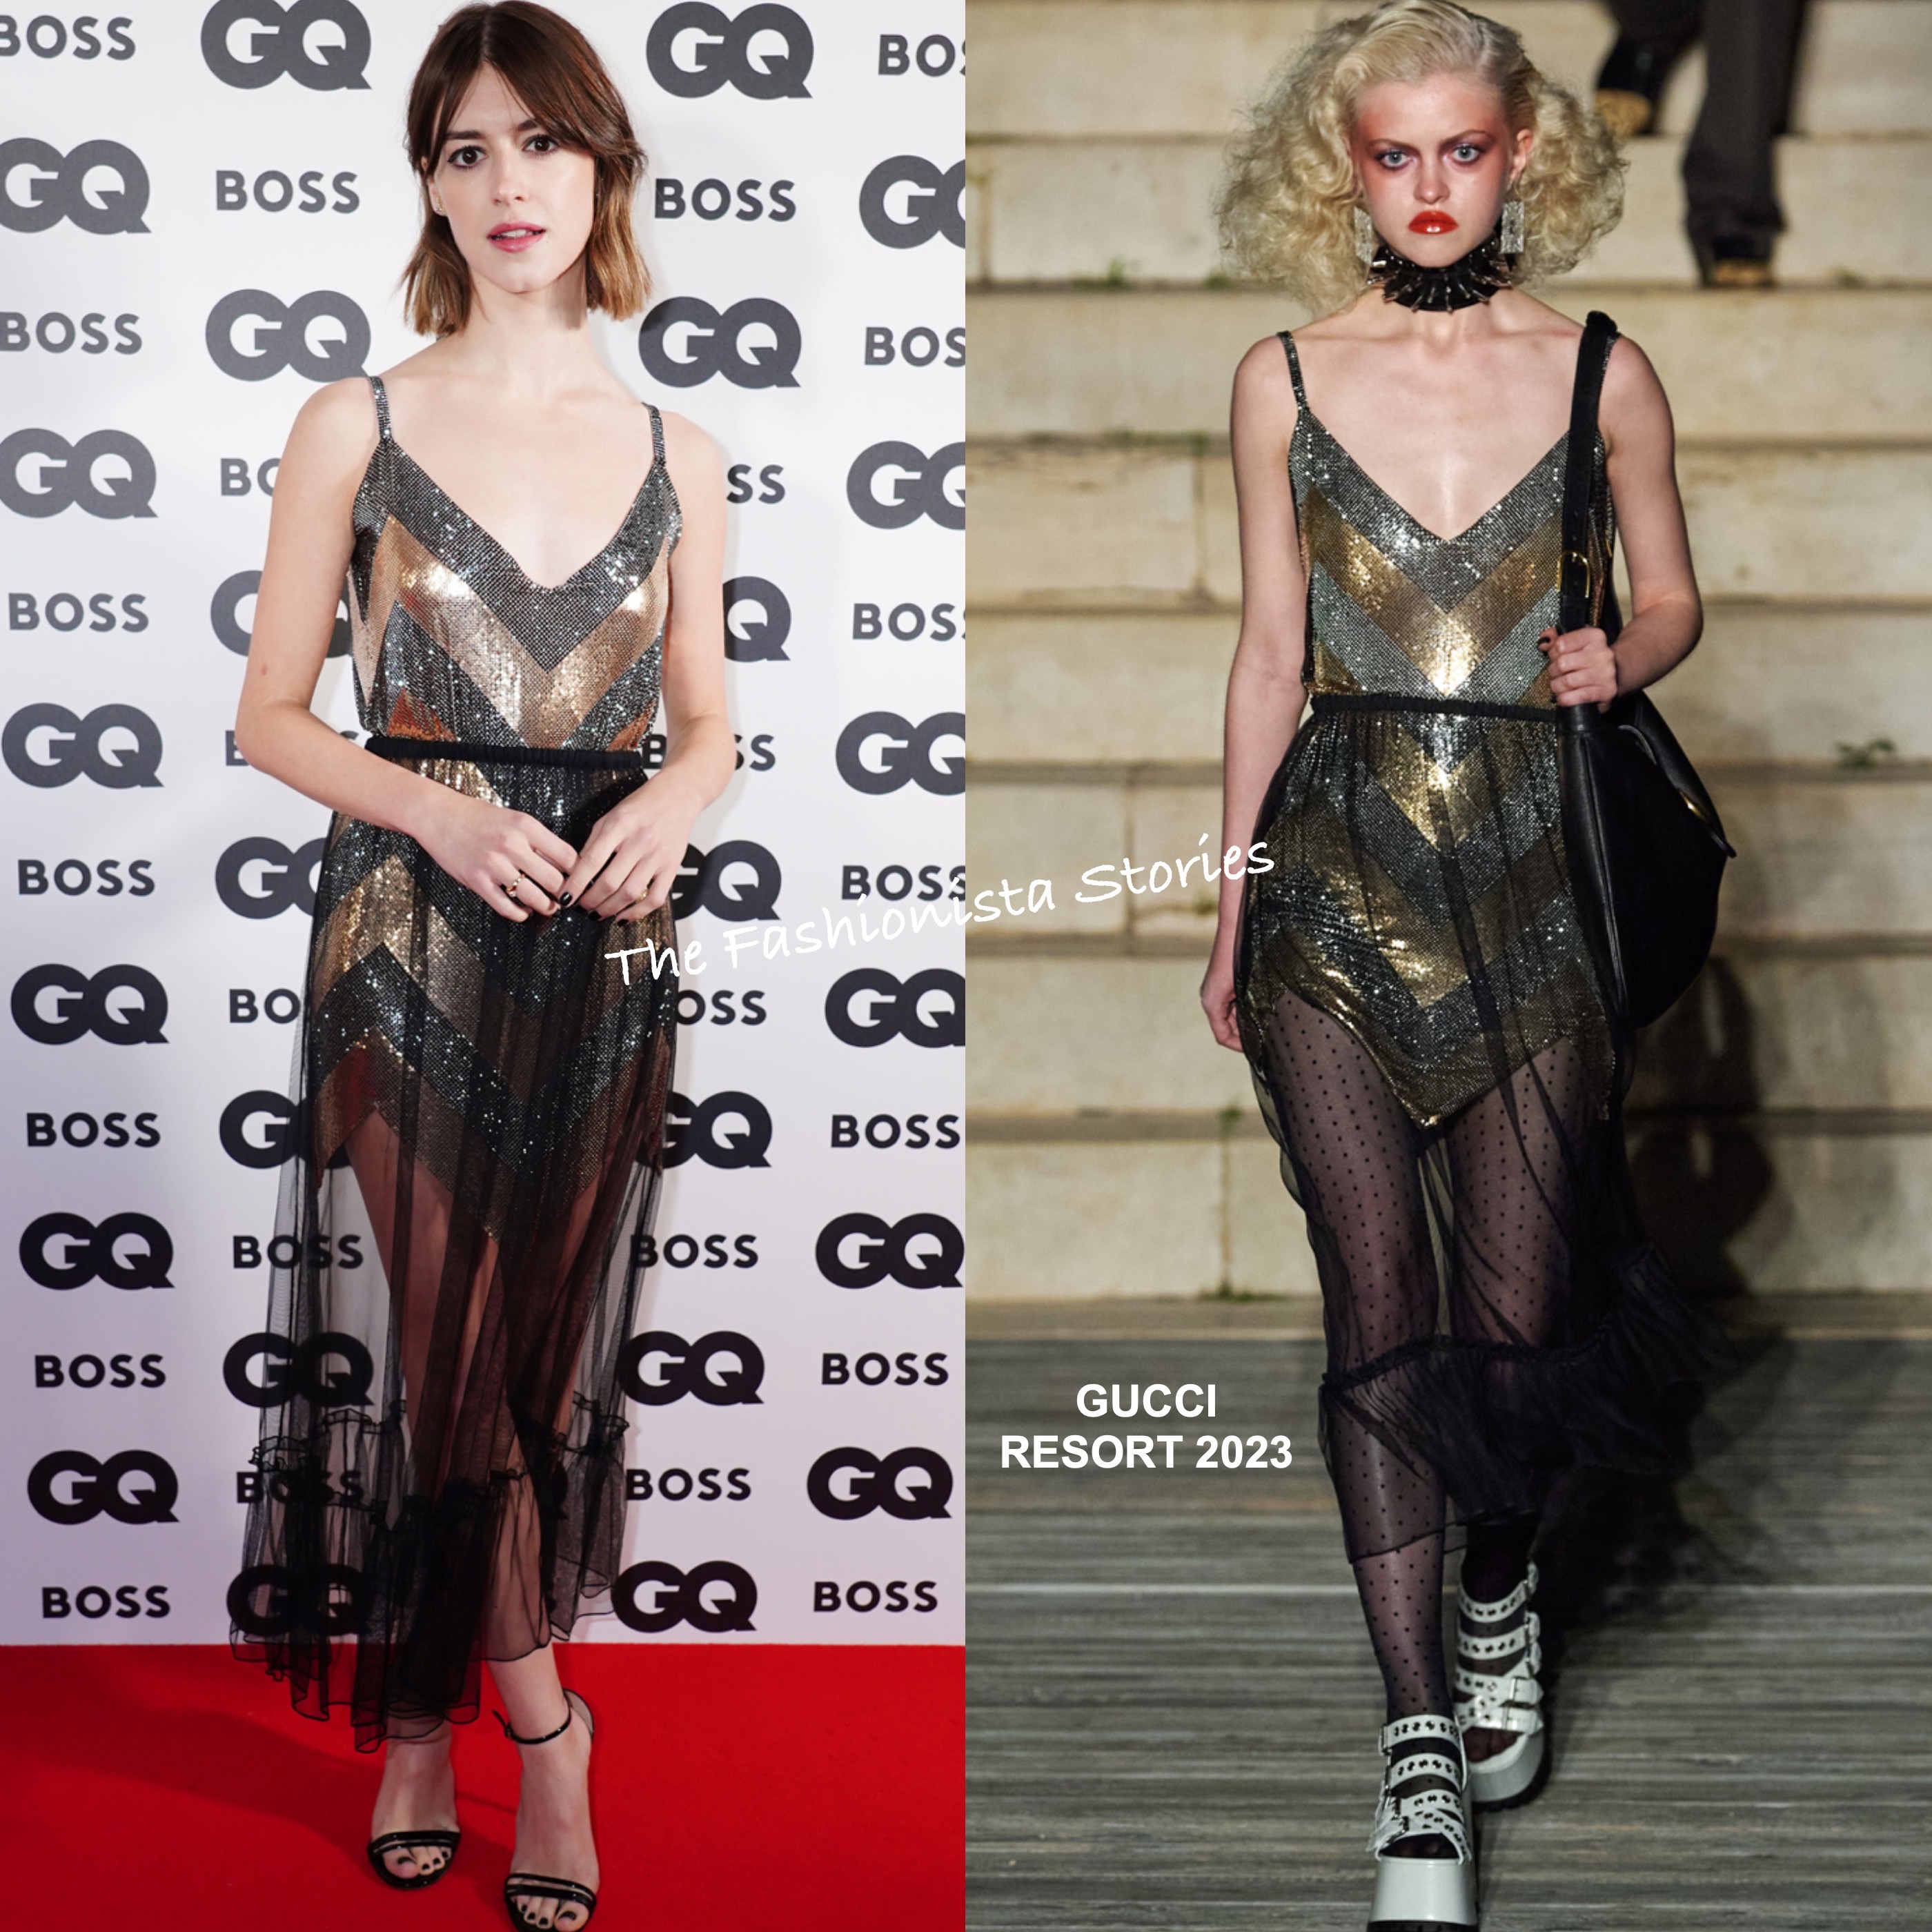 Phoebe Dynevor's new new fringe stole the Paris Fashion Week show